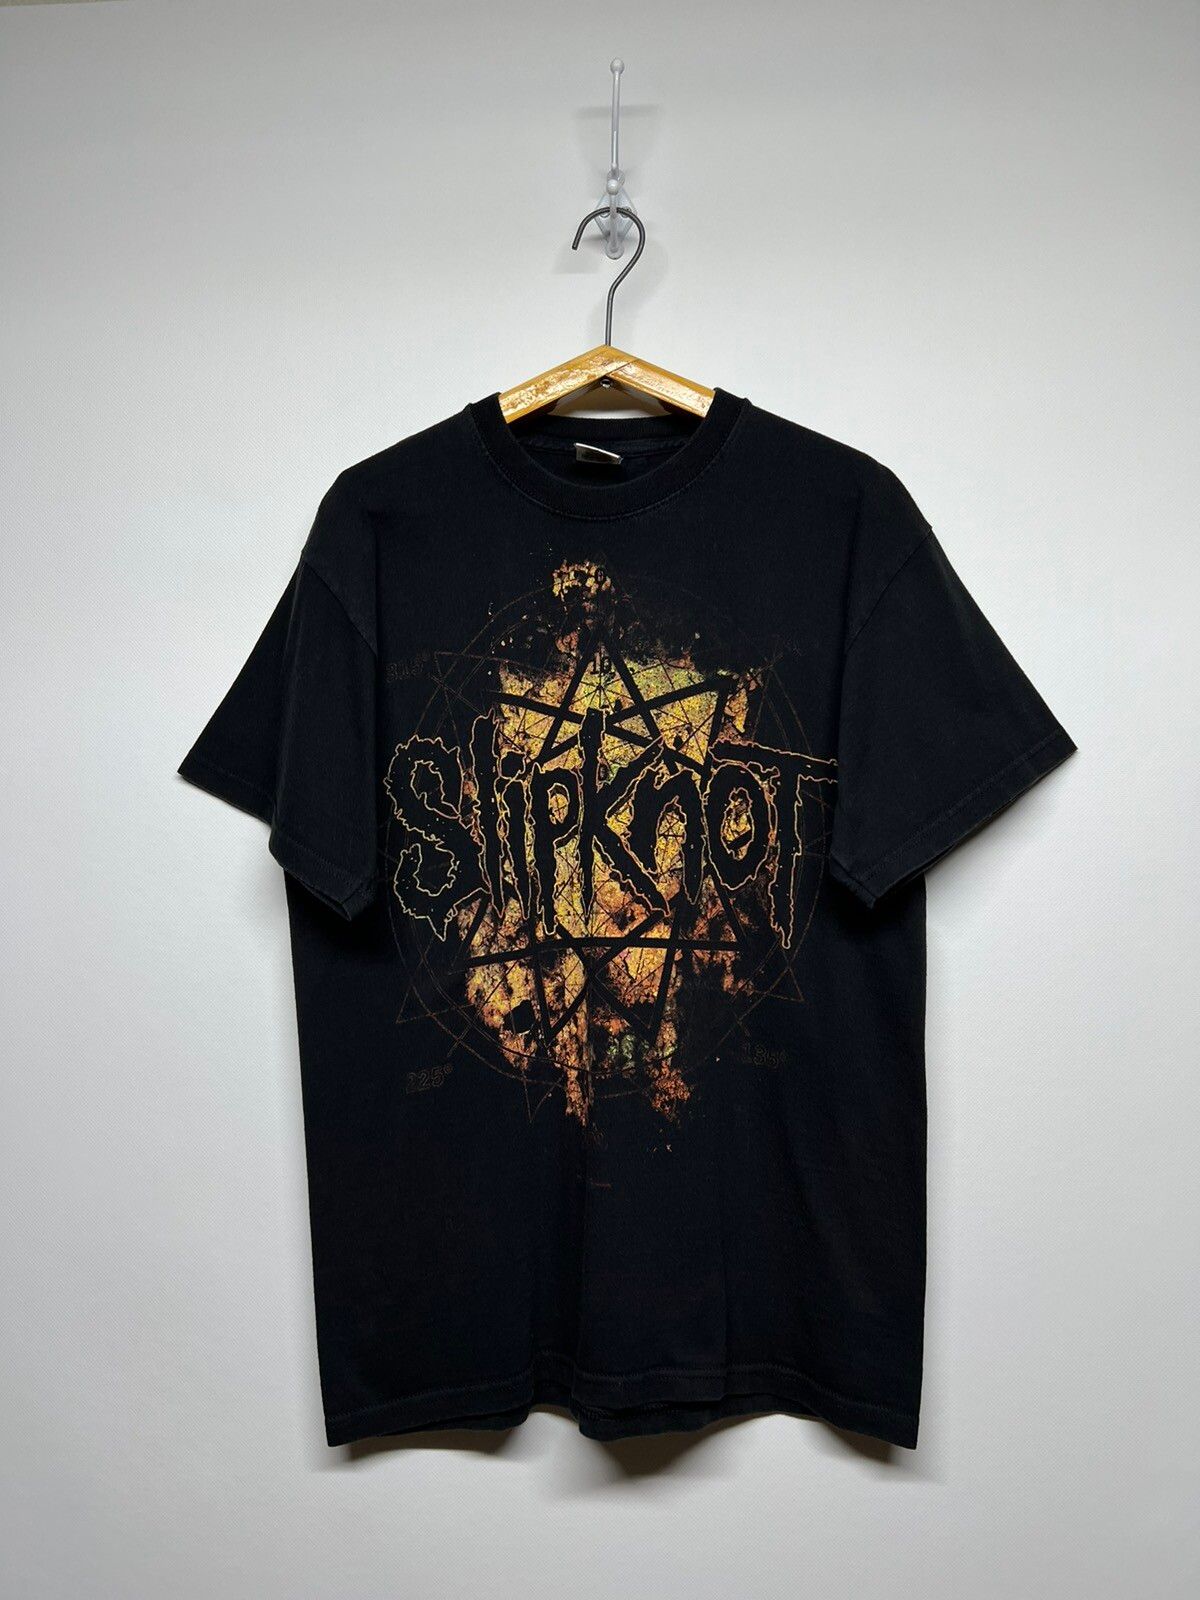 Vintage Vintage 2009 Slipknot All Hope Is Gone Tour T-Shirt Size US M / EU 48-50 / 2 - 1 Preview